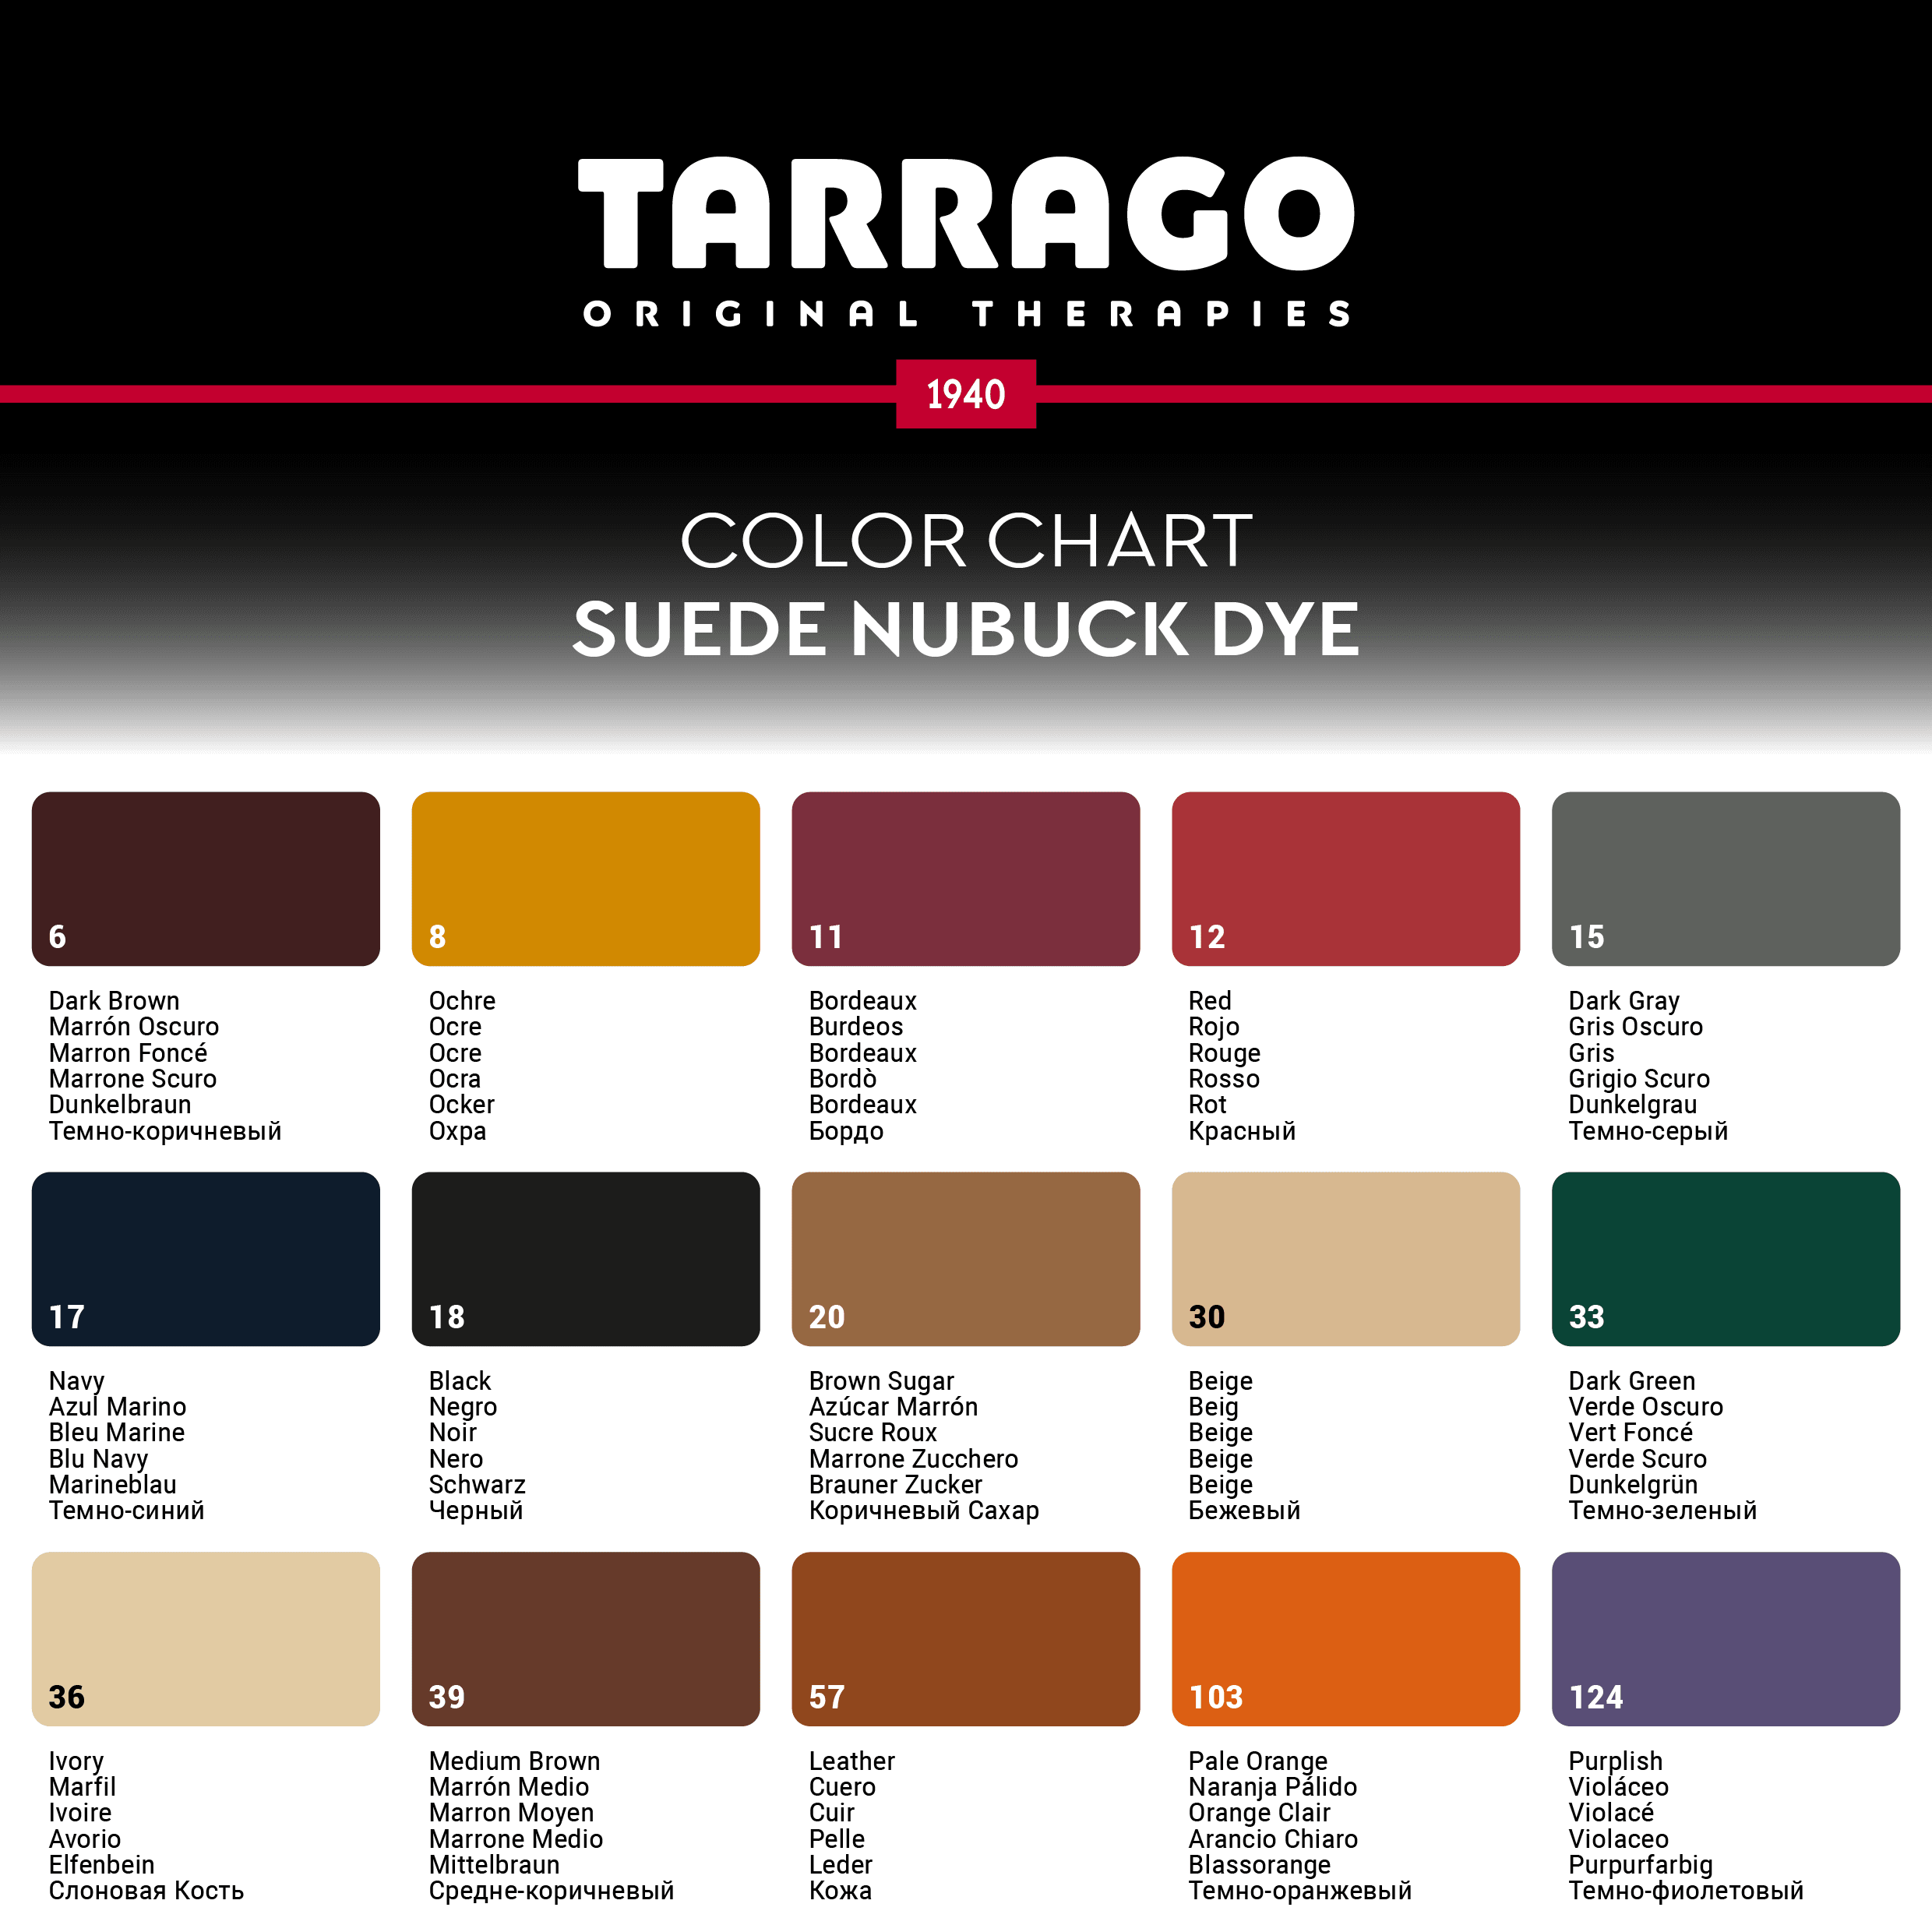  Tarrago Suede Nubuck Dye